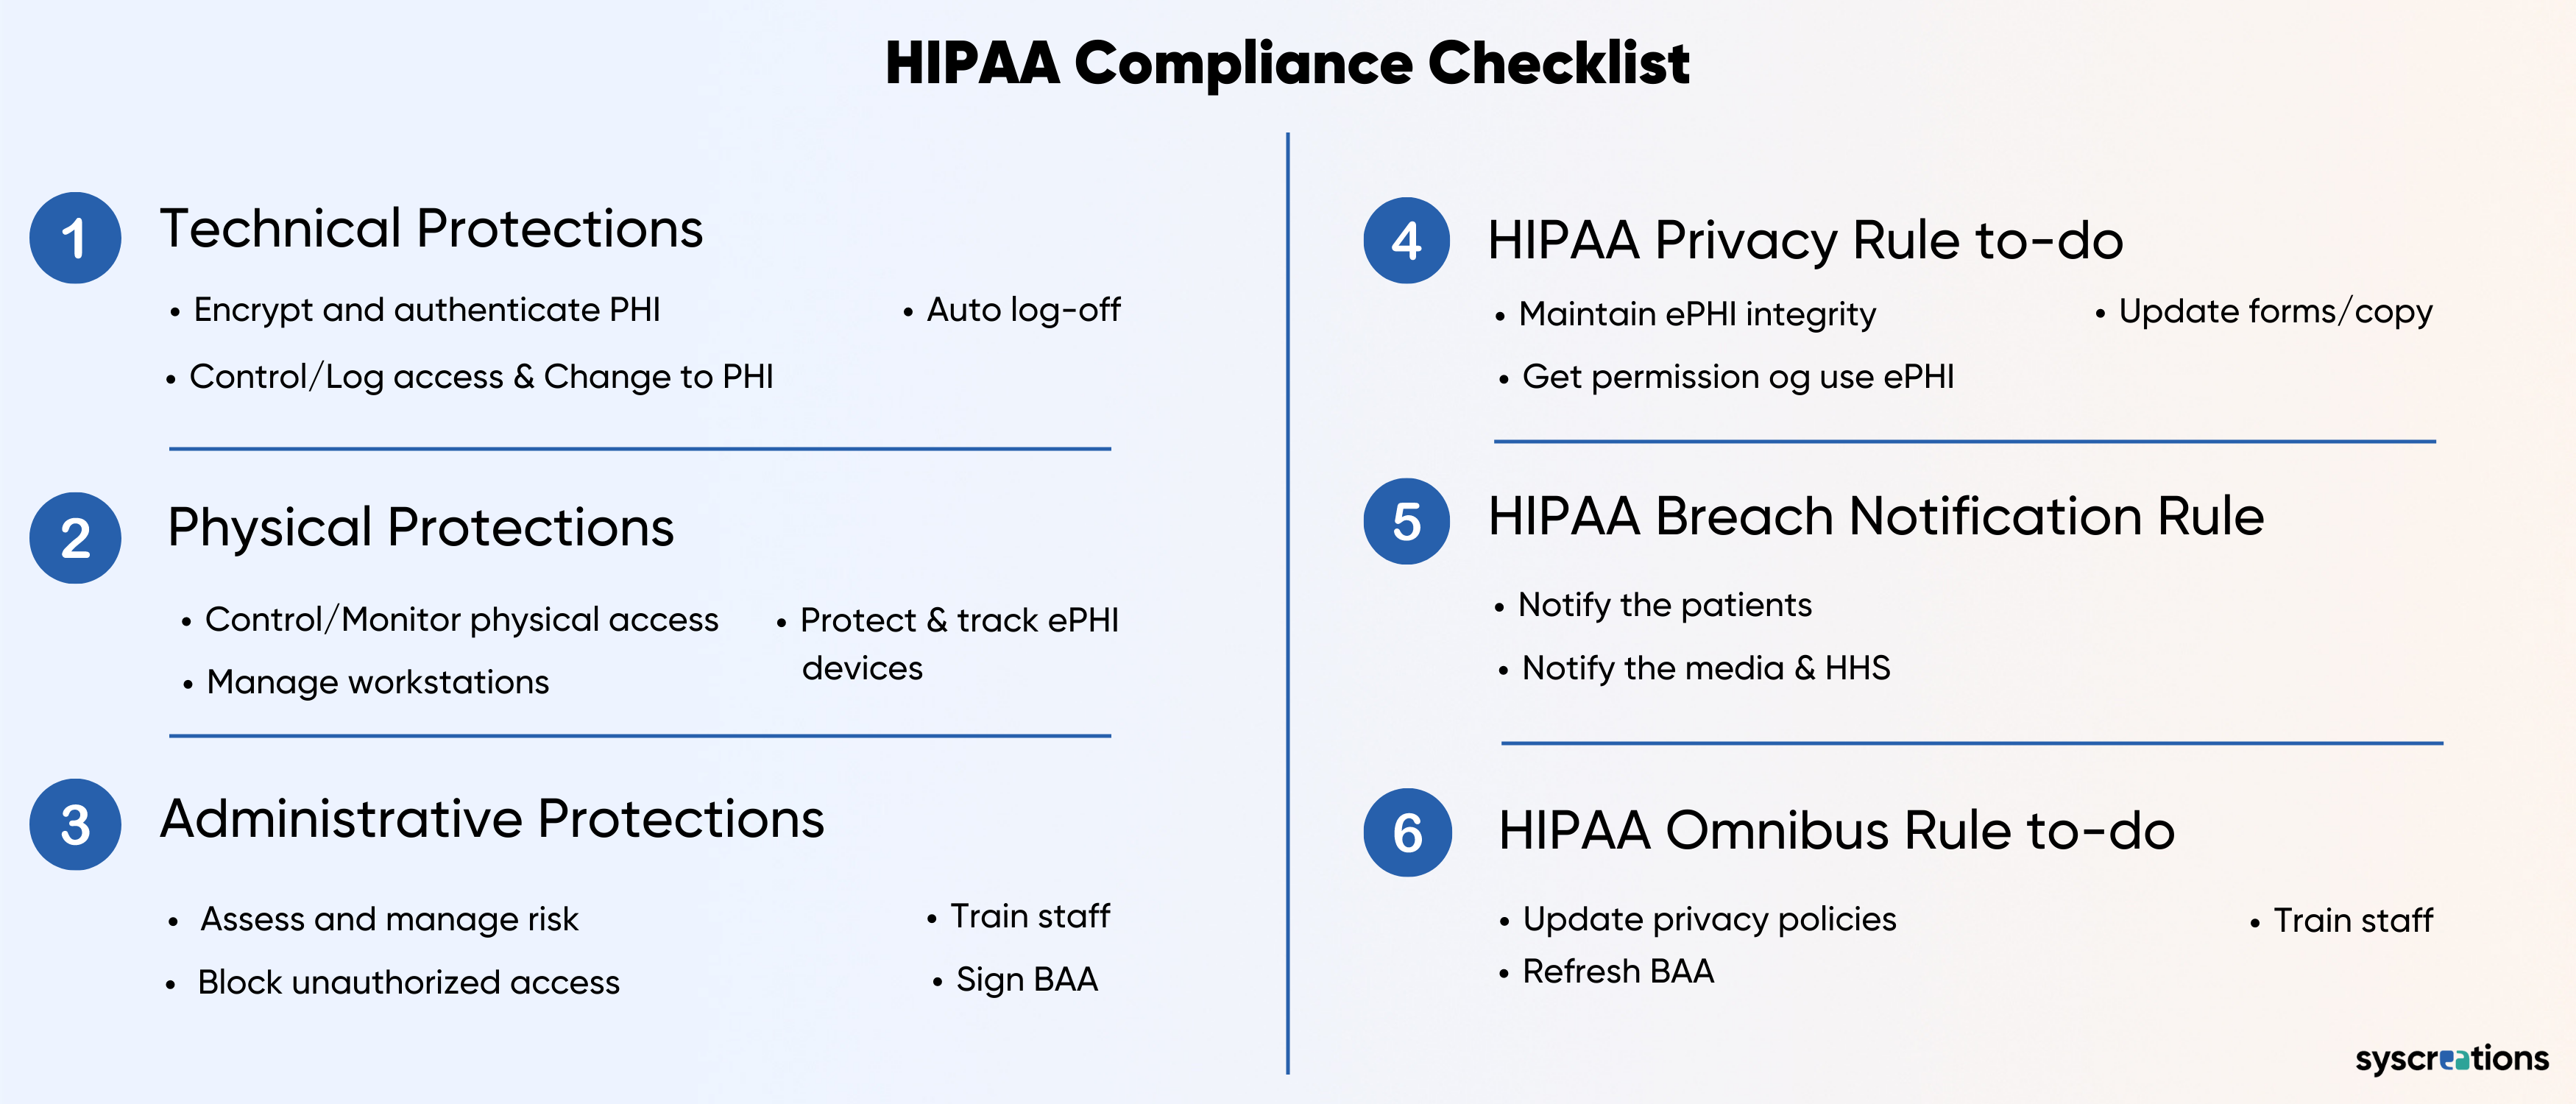 HIPAA compliance checklist